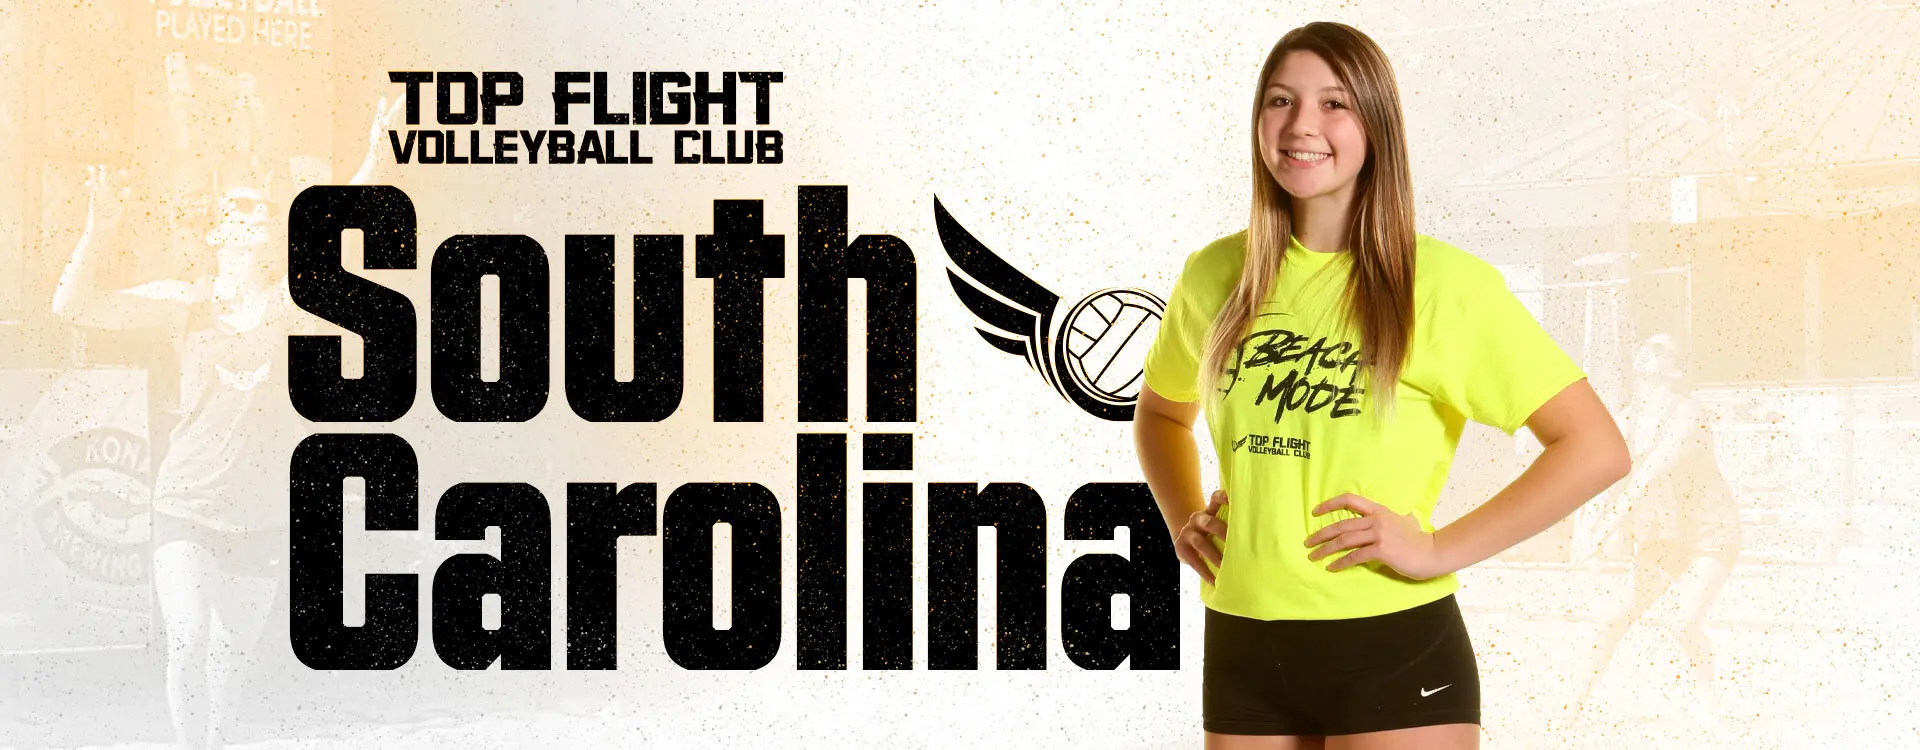 Top Flight VBC - South Carolina Event Banner